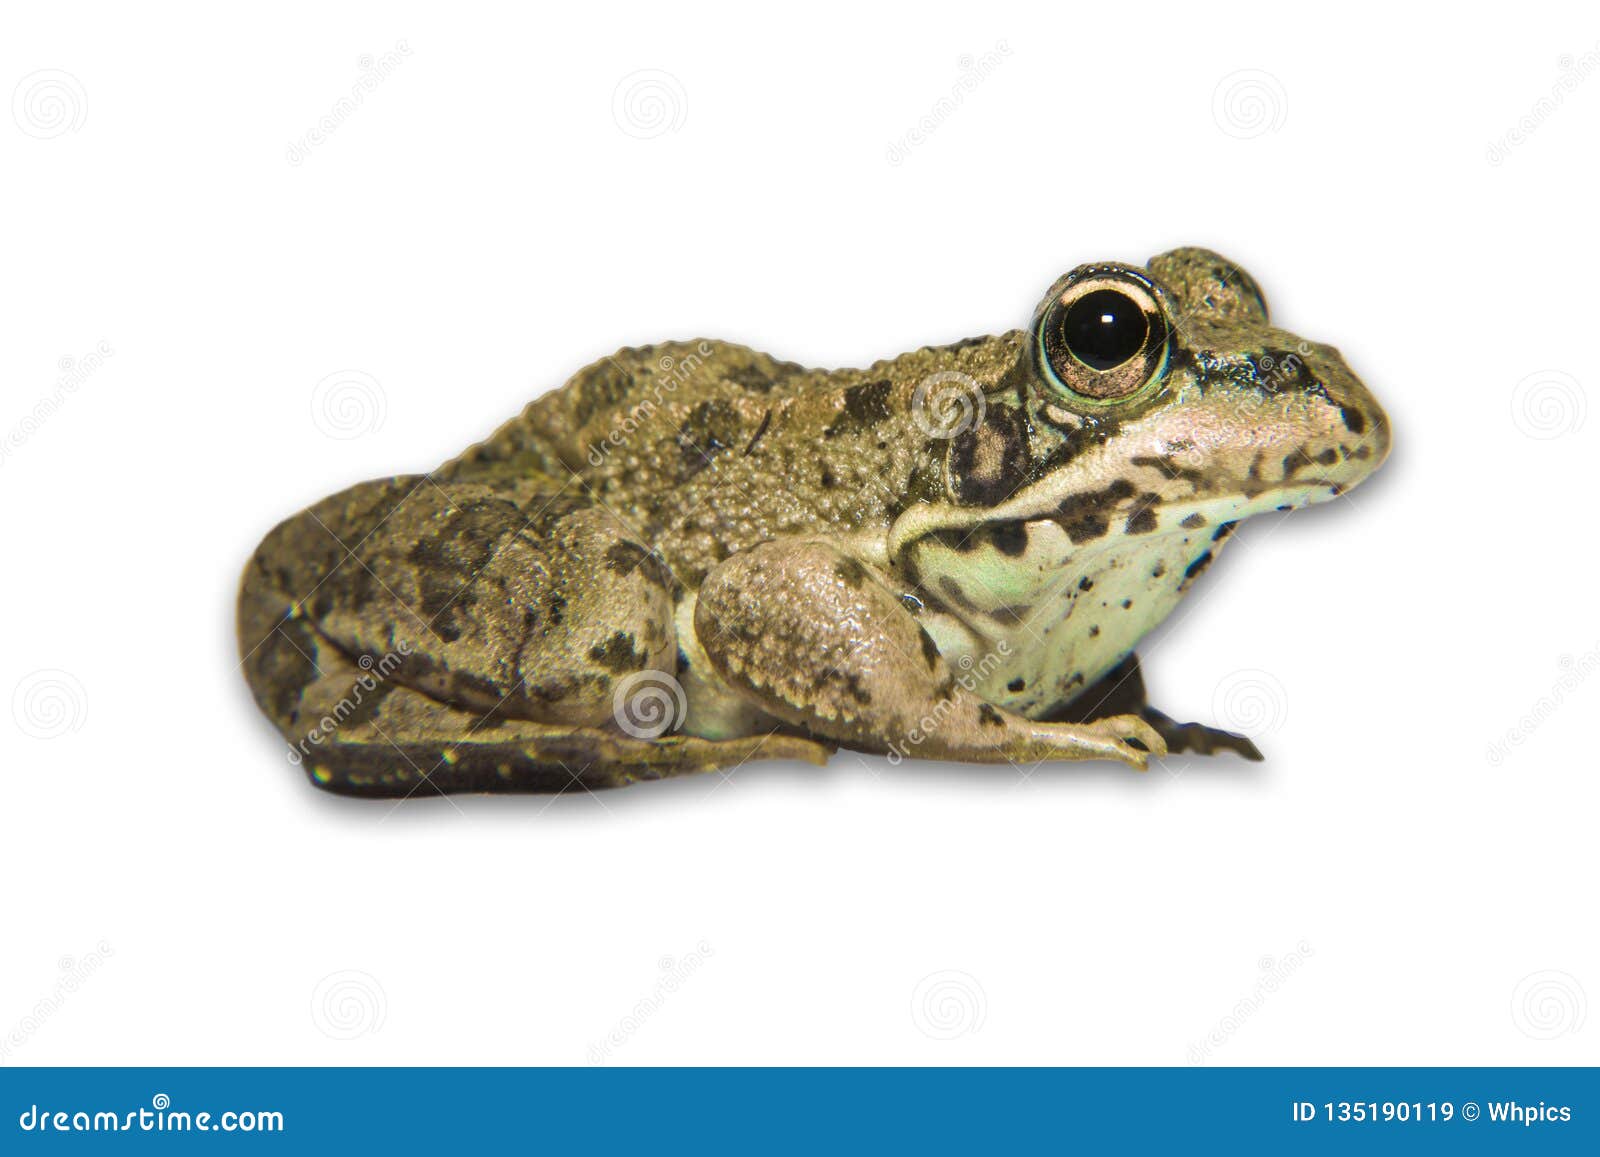 iberian waterfrog or pelophylax perezi